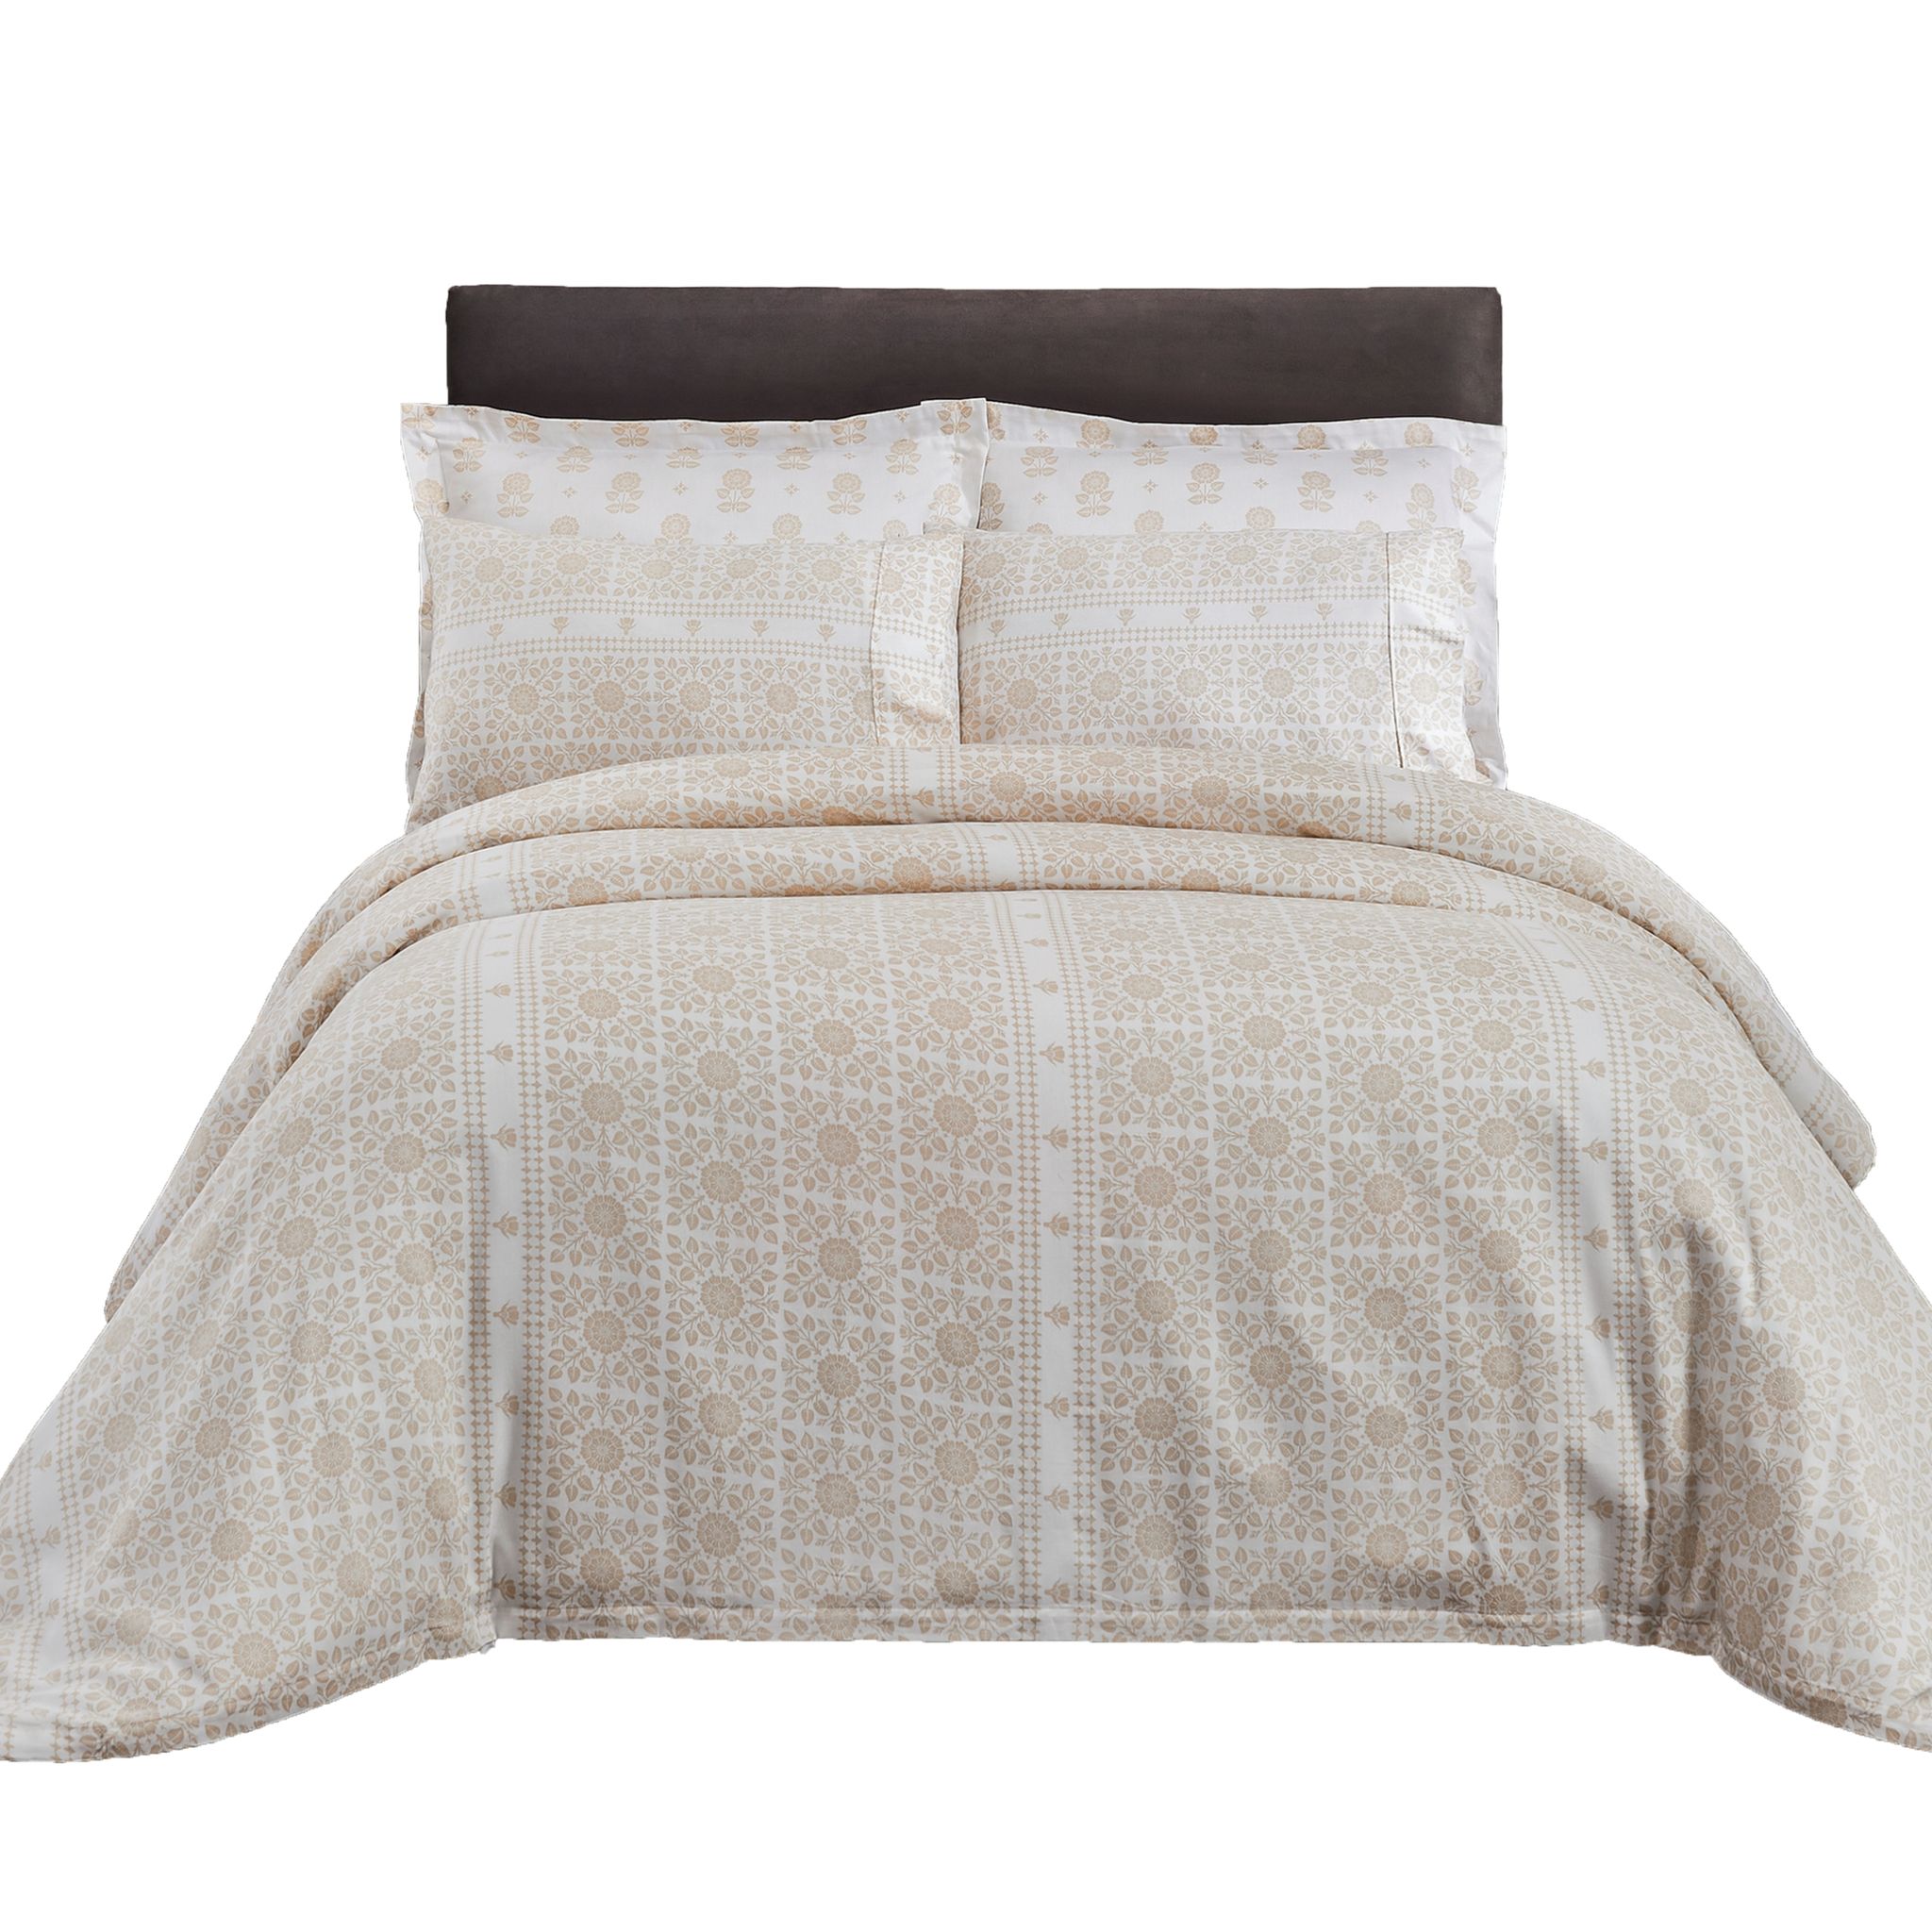 Exquisite Trail Printed Cotton Comforter Set 7-Piece King Beige